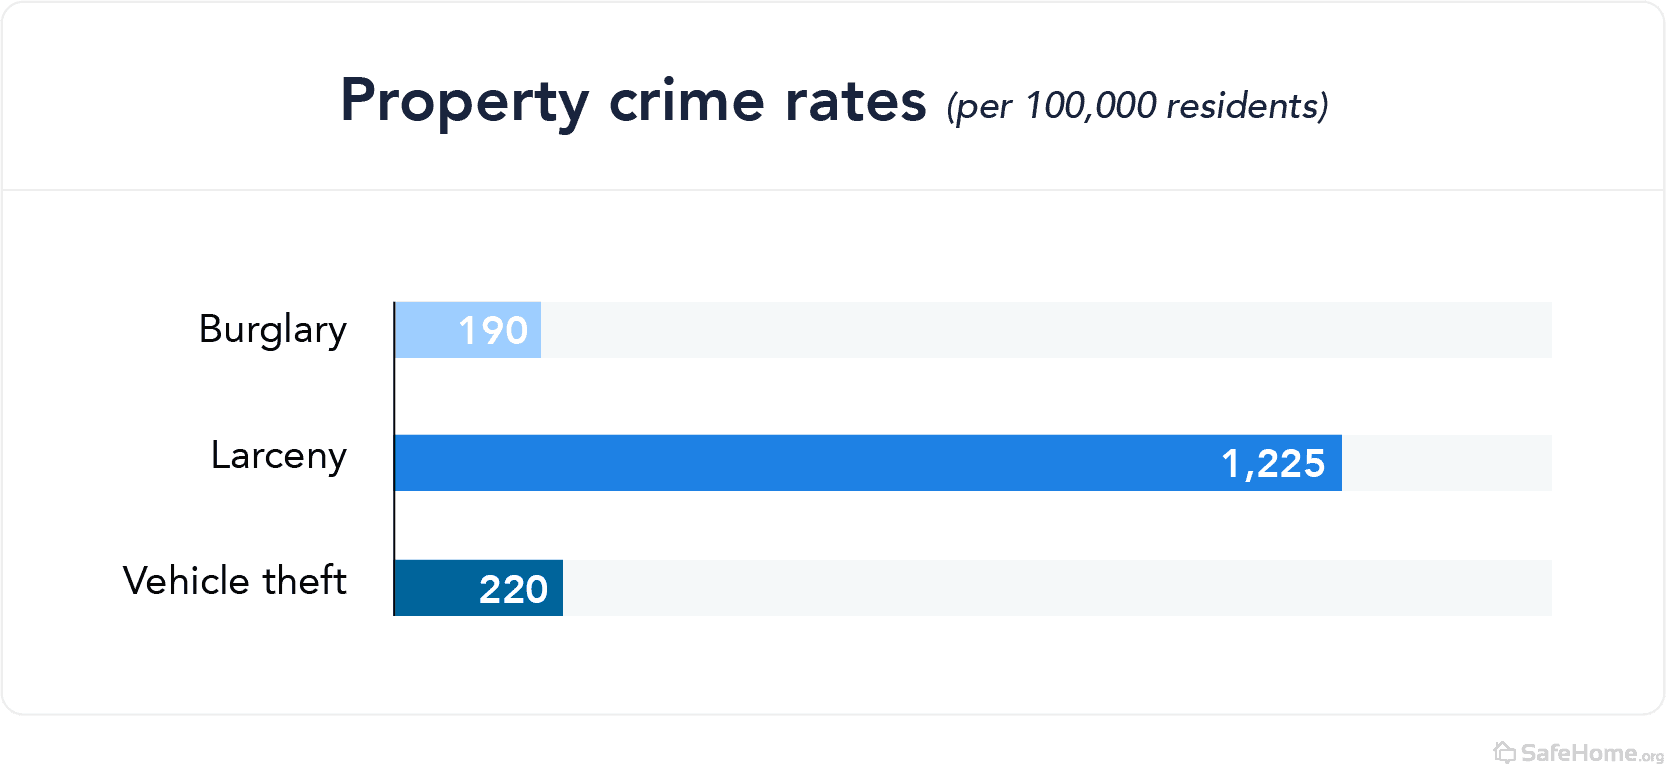 Maryland property crime rates